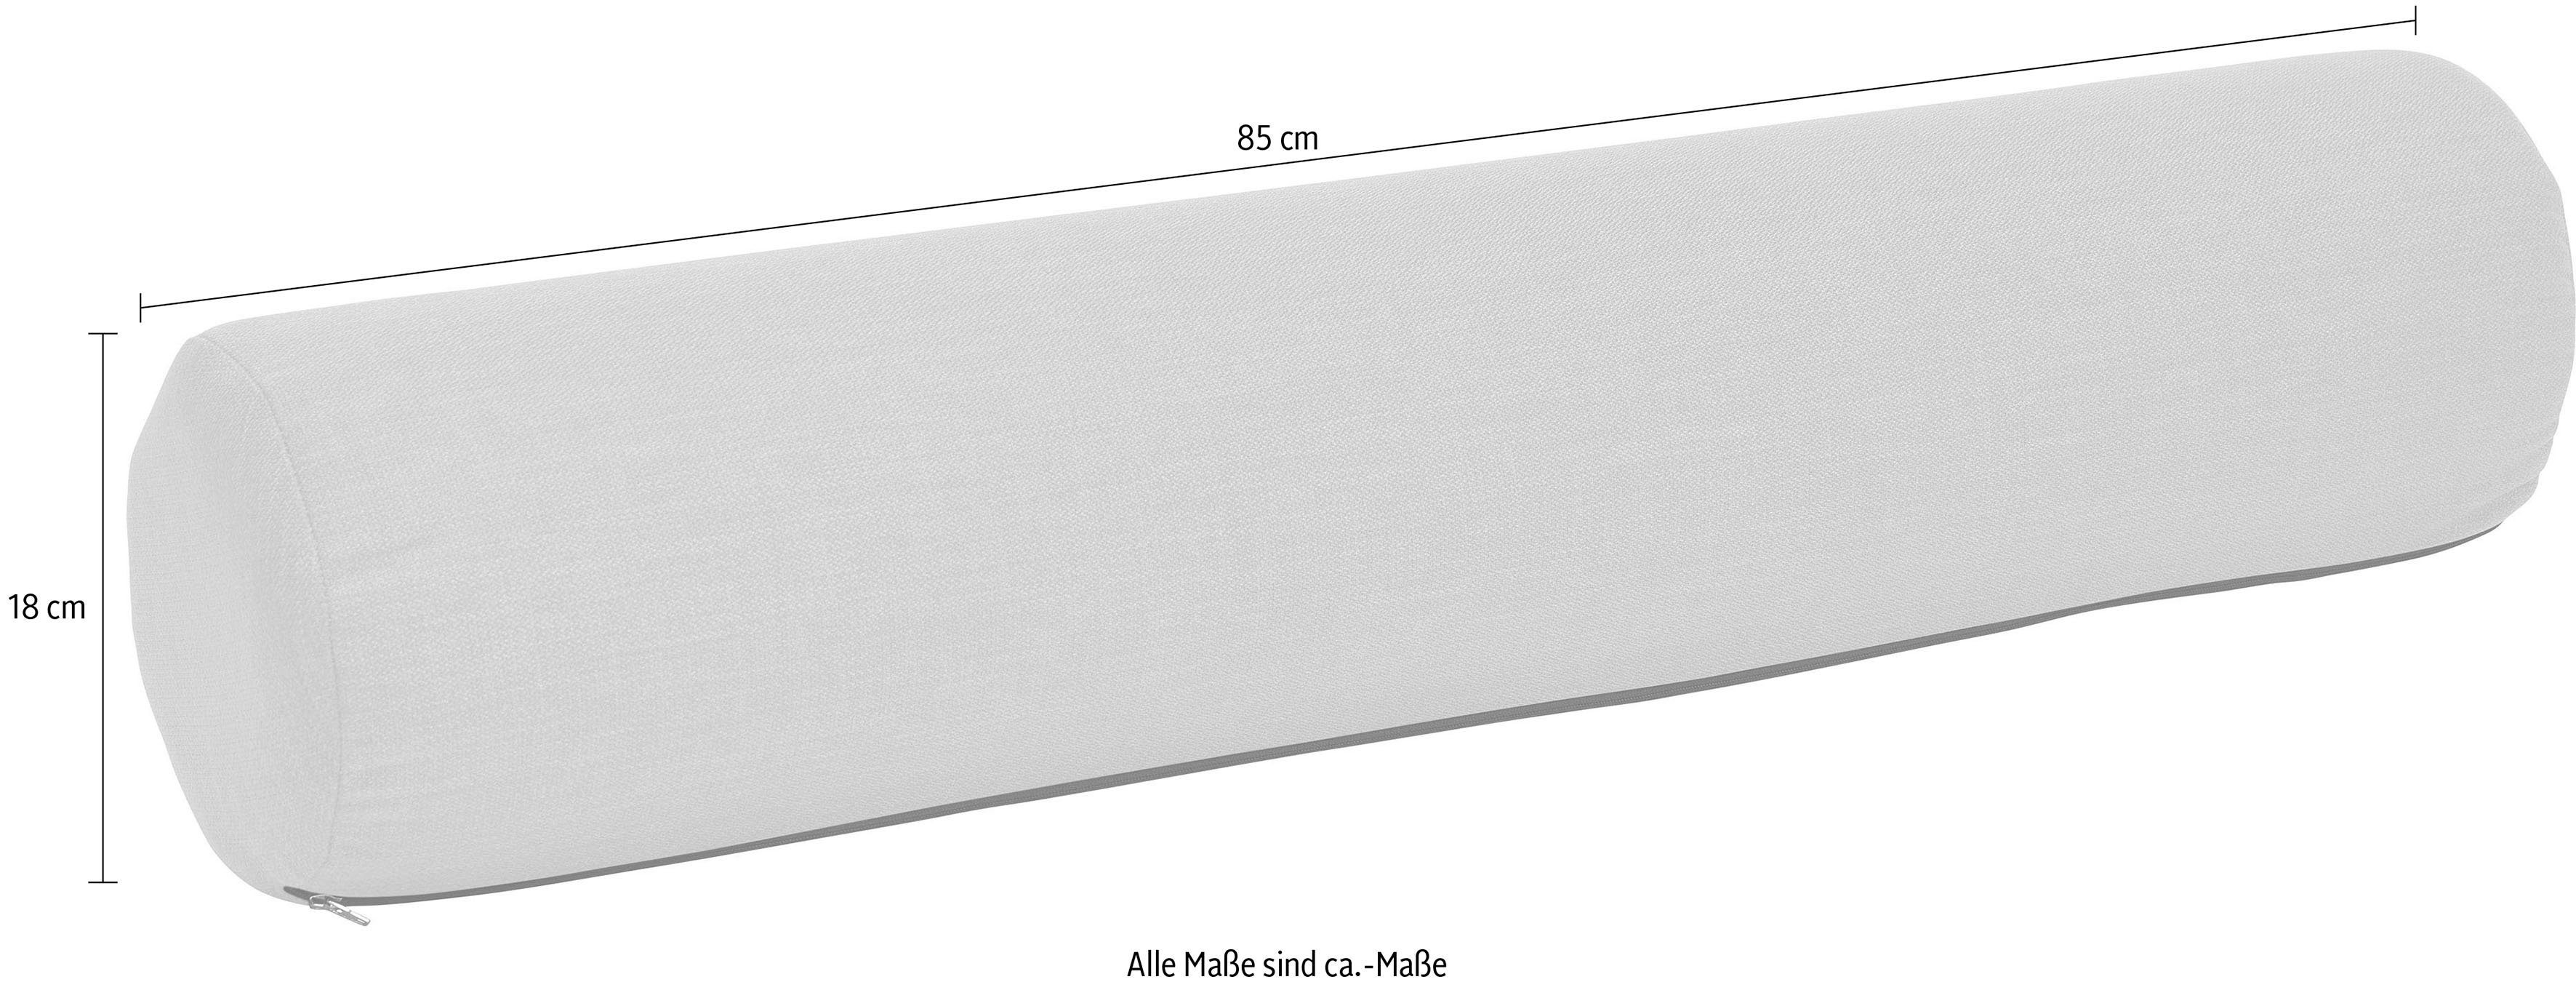 Müller Kopfstütze LIVING Bezugsstoffen in SMALL RG-25-Nackenrolle, zwei hochwertigen